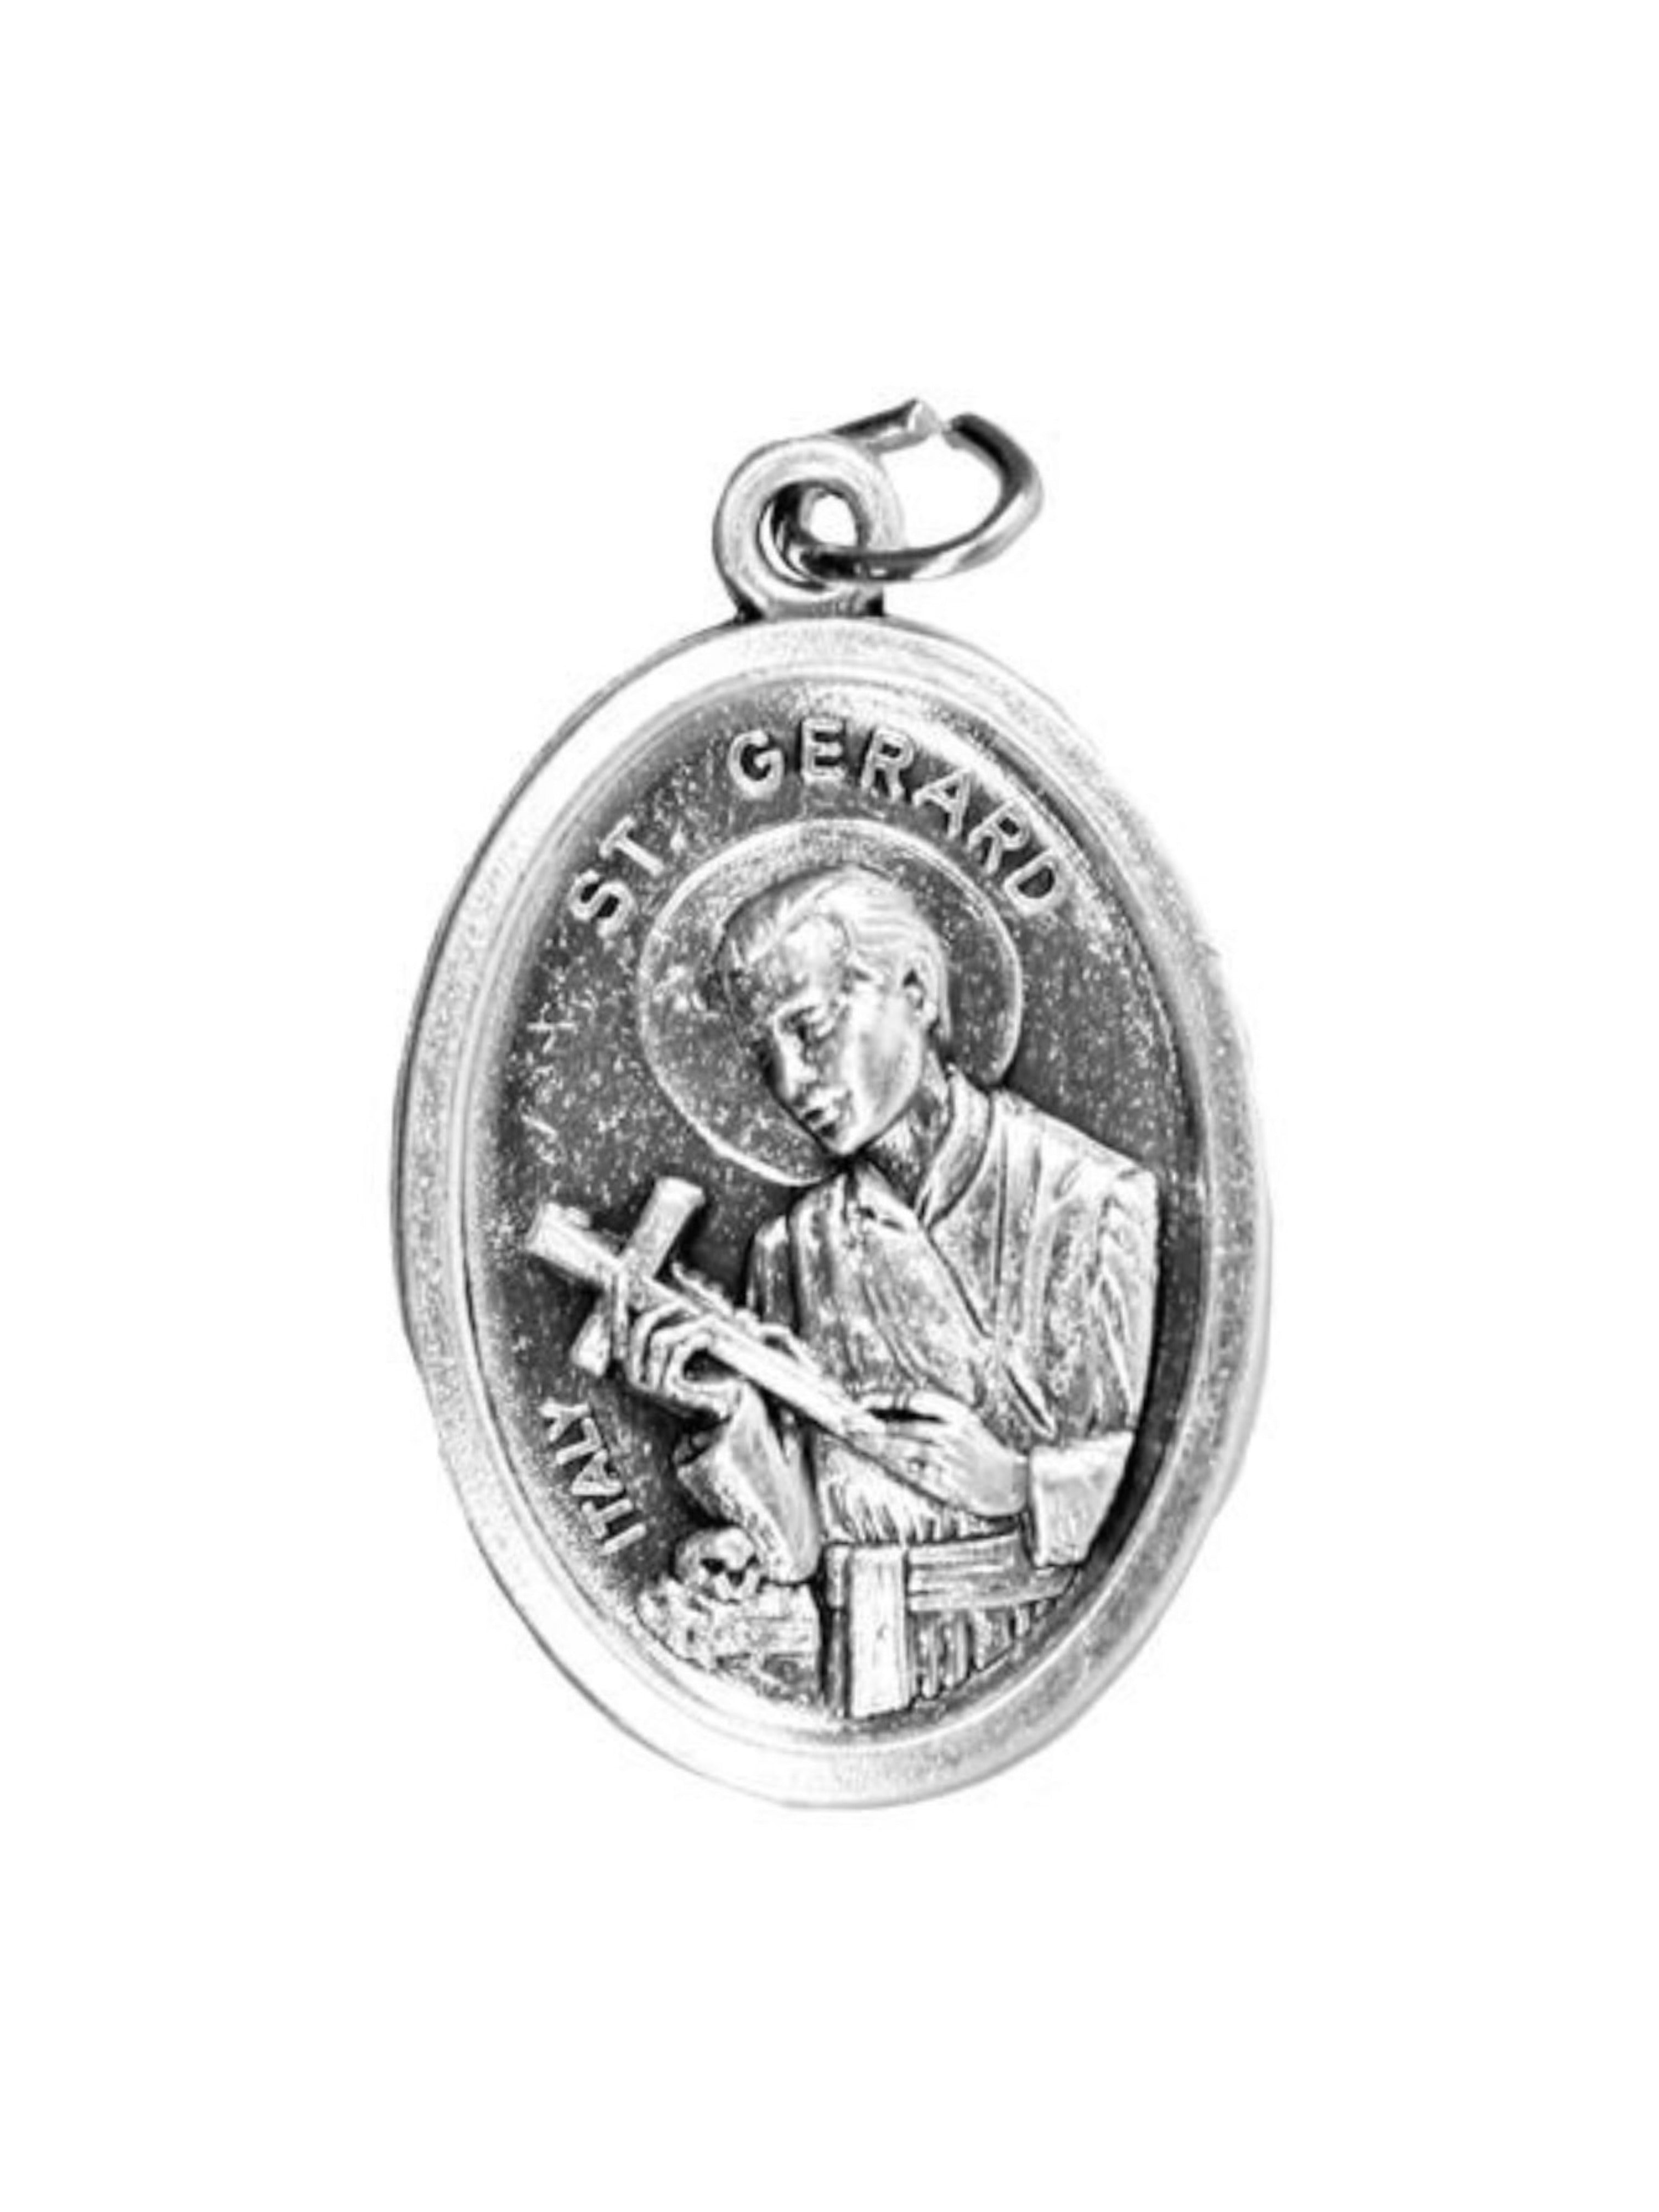 Saint Gerard Medal